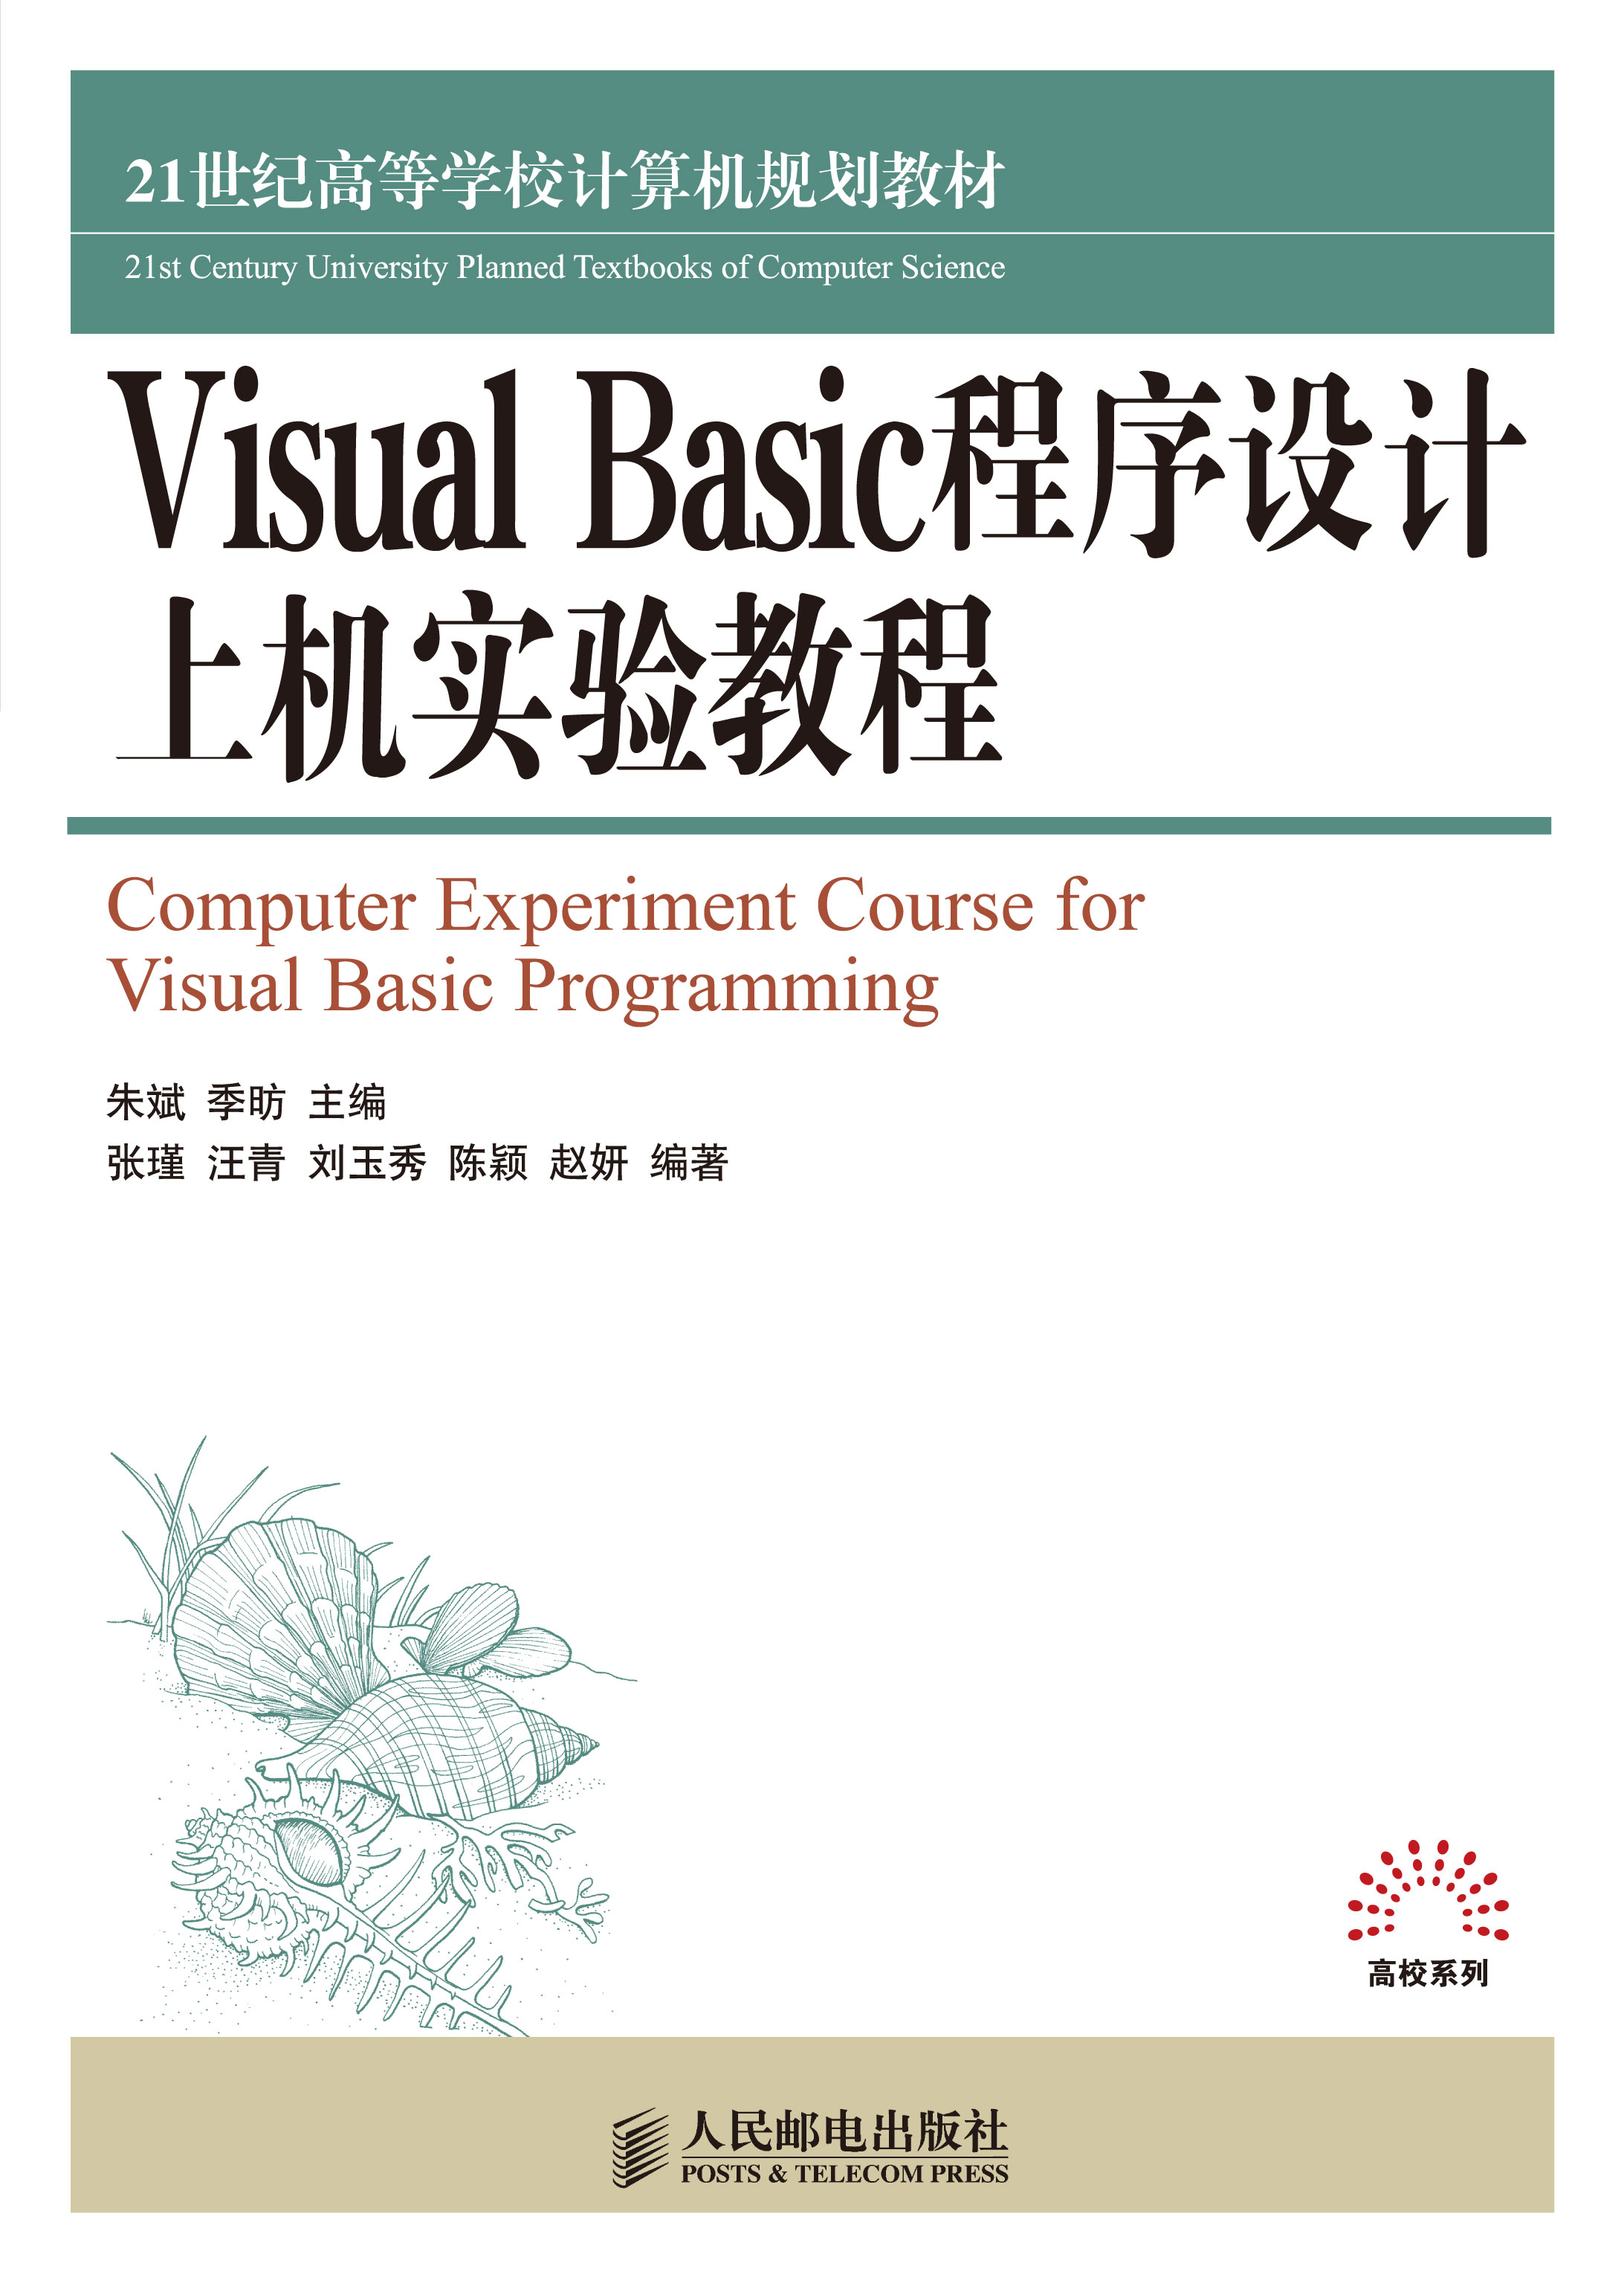 VisualBasic程序设计上机实验教程